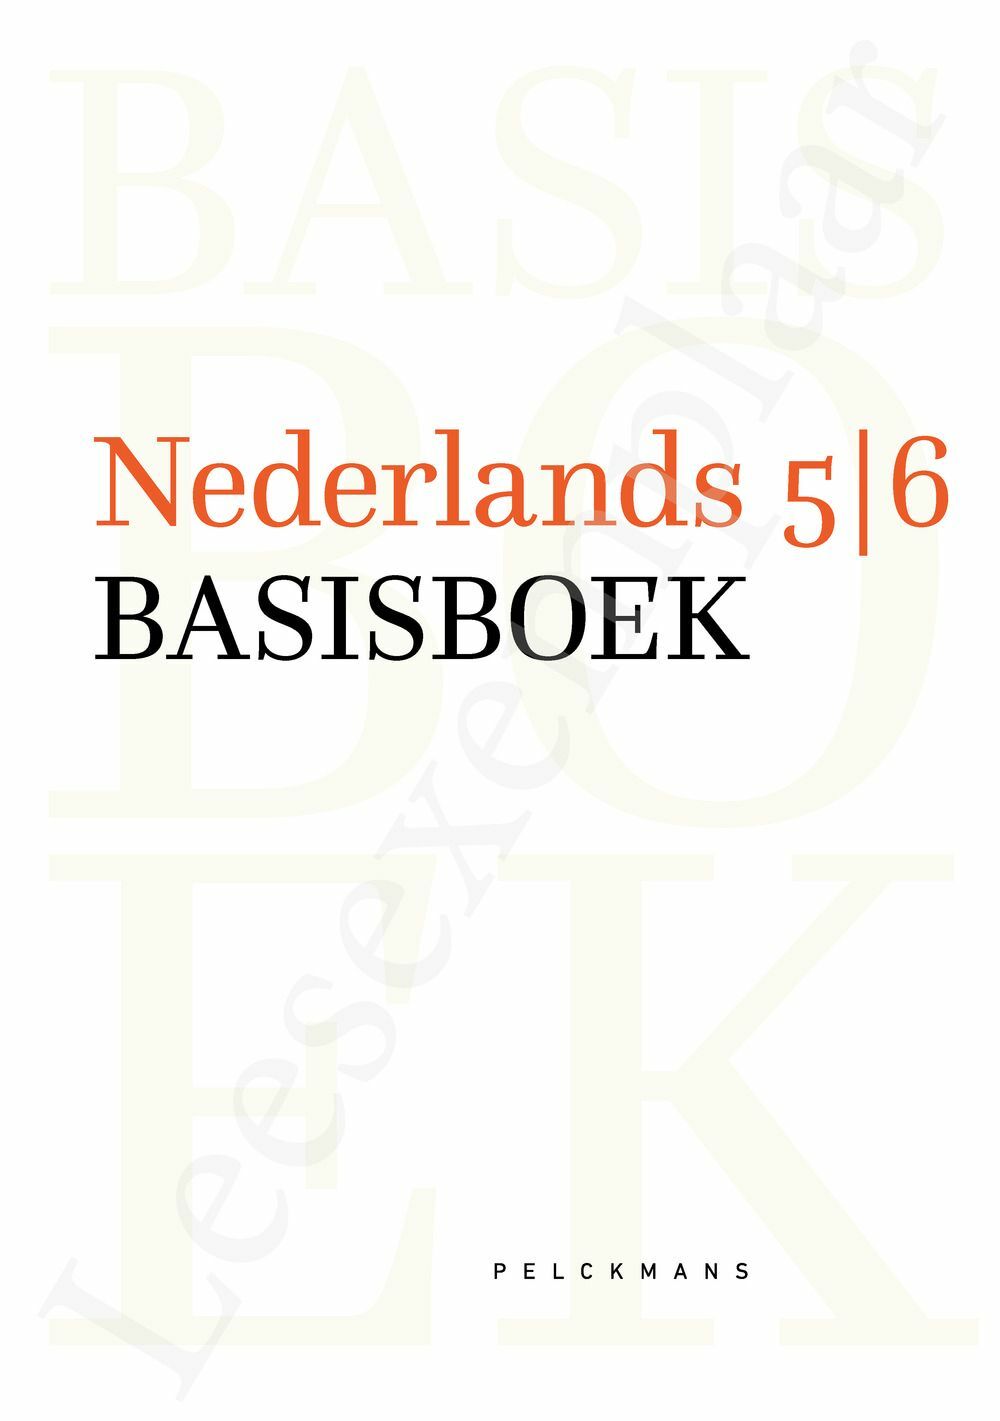 Preview: Campus Nederlands 5/6 Basisboek (incl. Pelckmans Portaal)